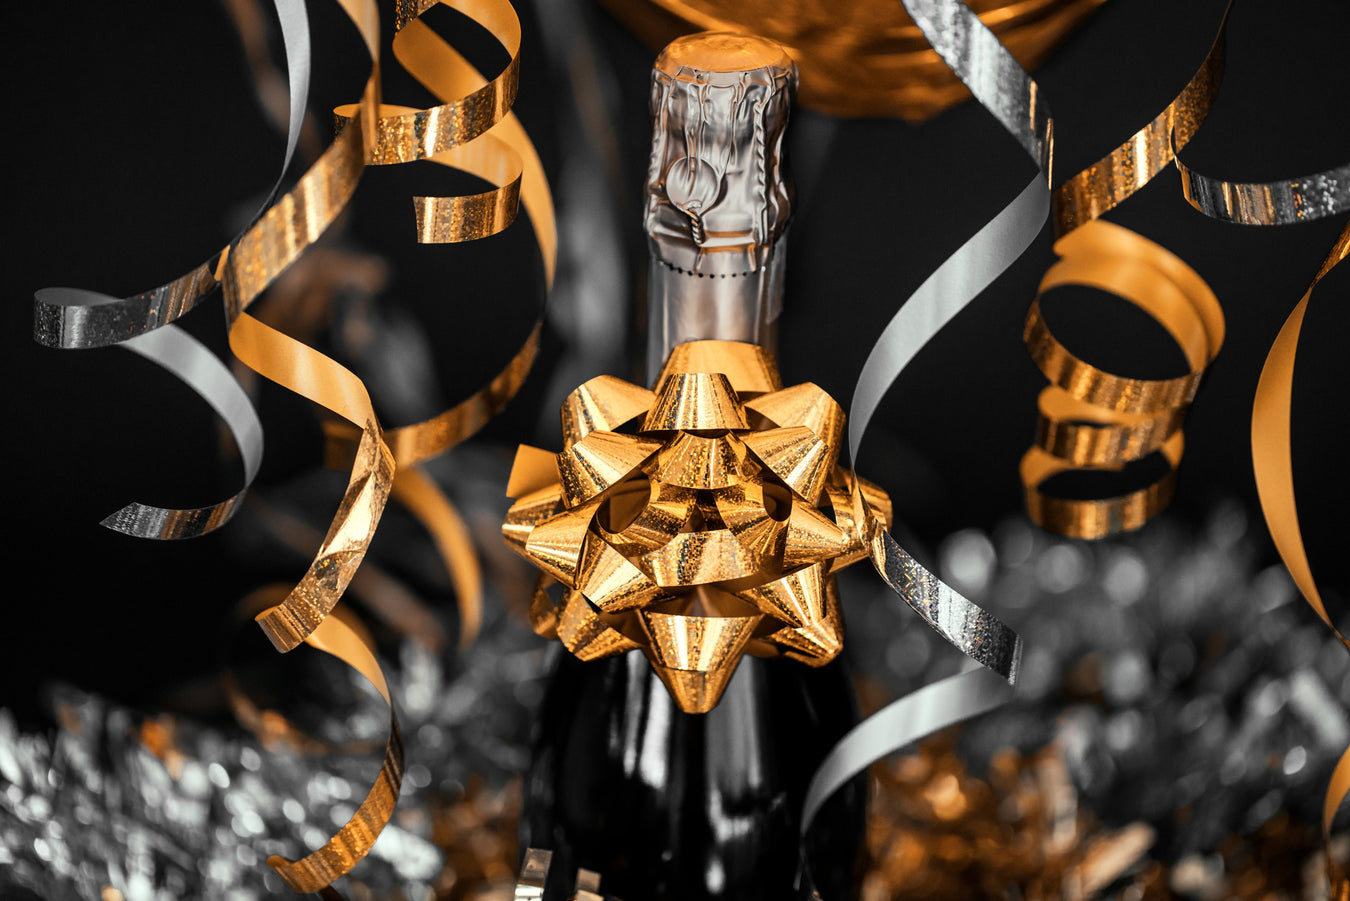 sparkling wine to celebrate, gift ideas